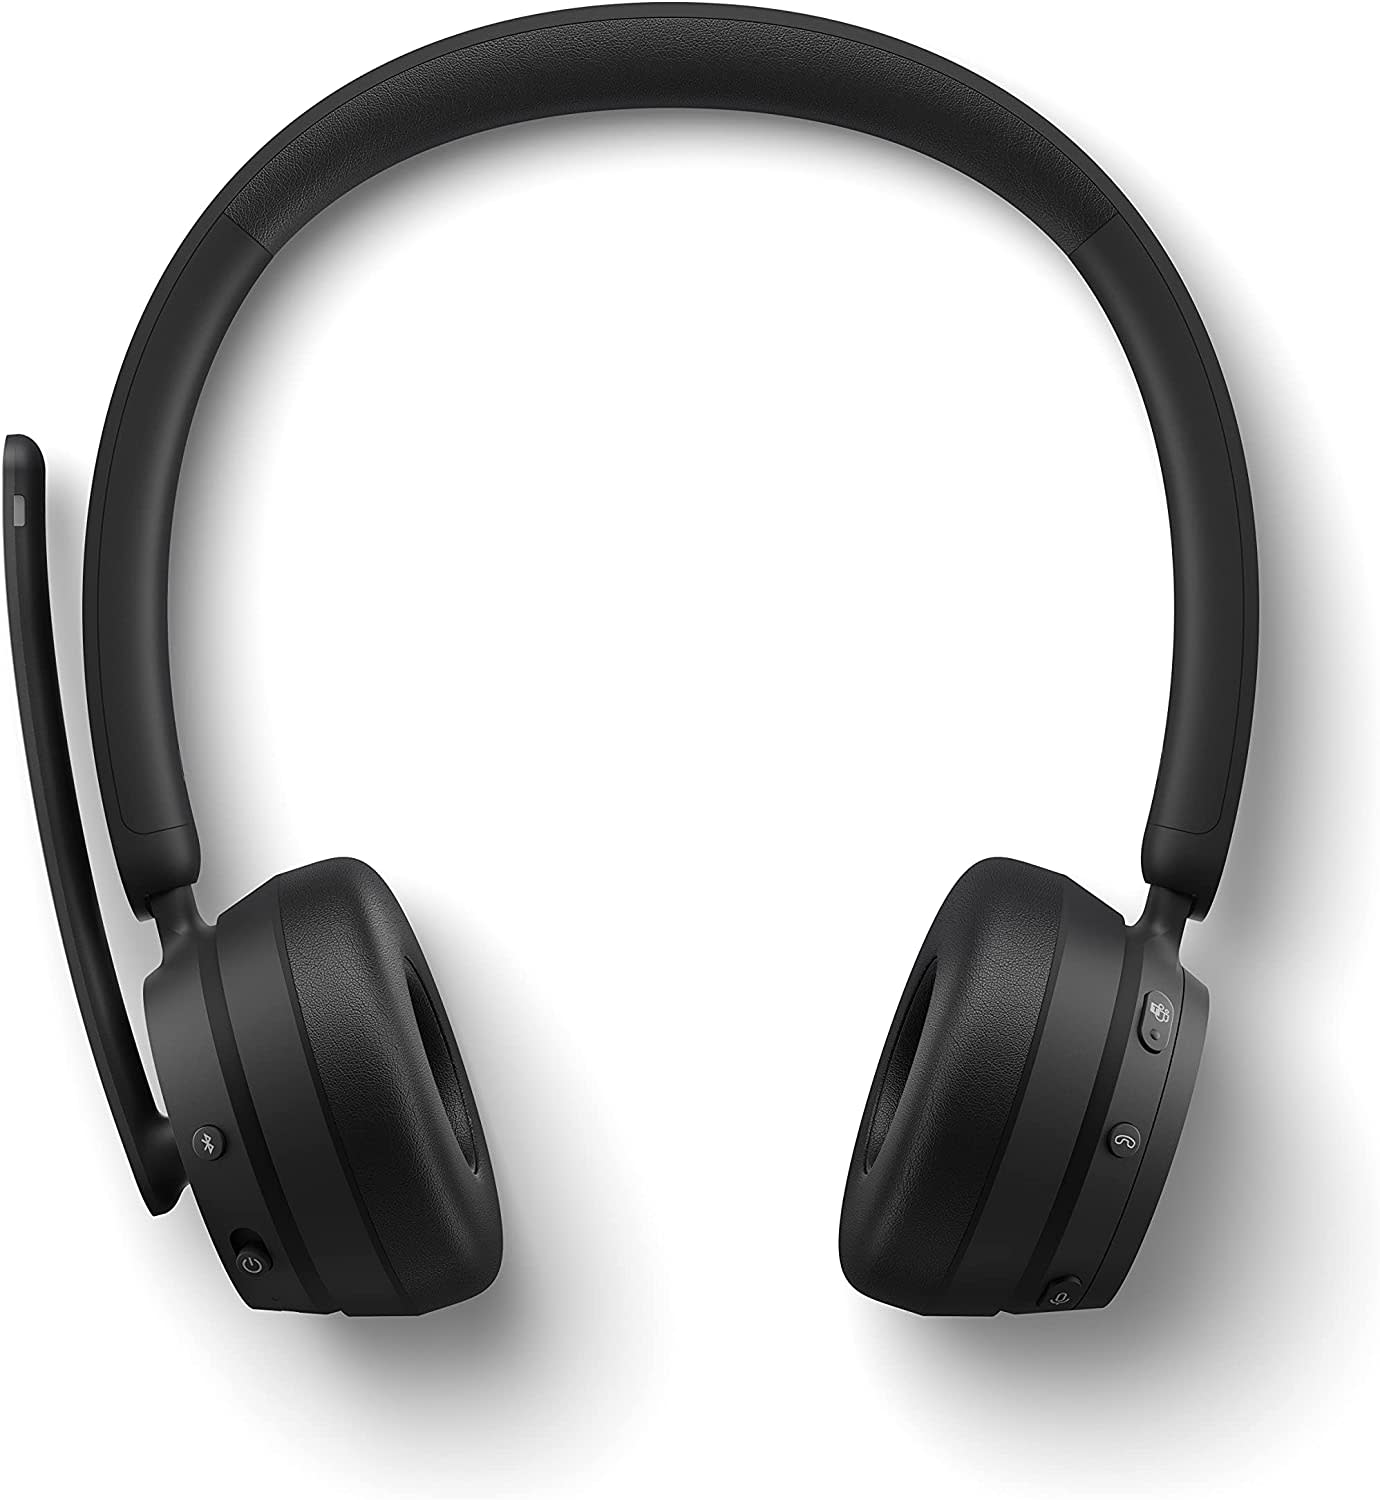 Microsoft Modern Wireless Headset, Black - image 2 of 4